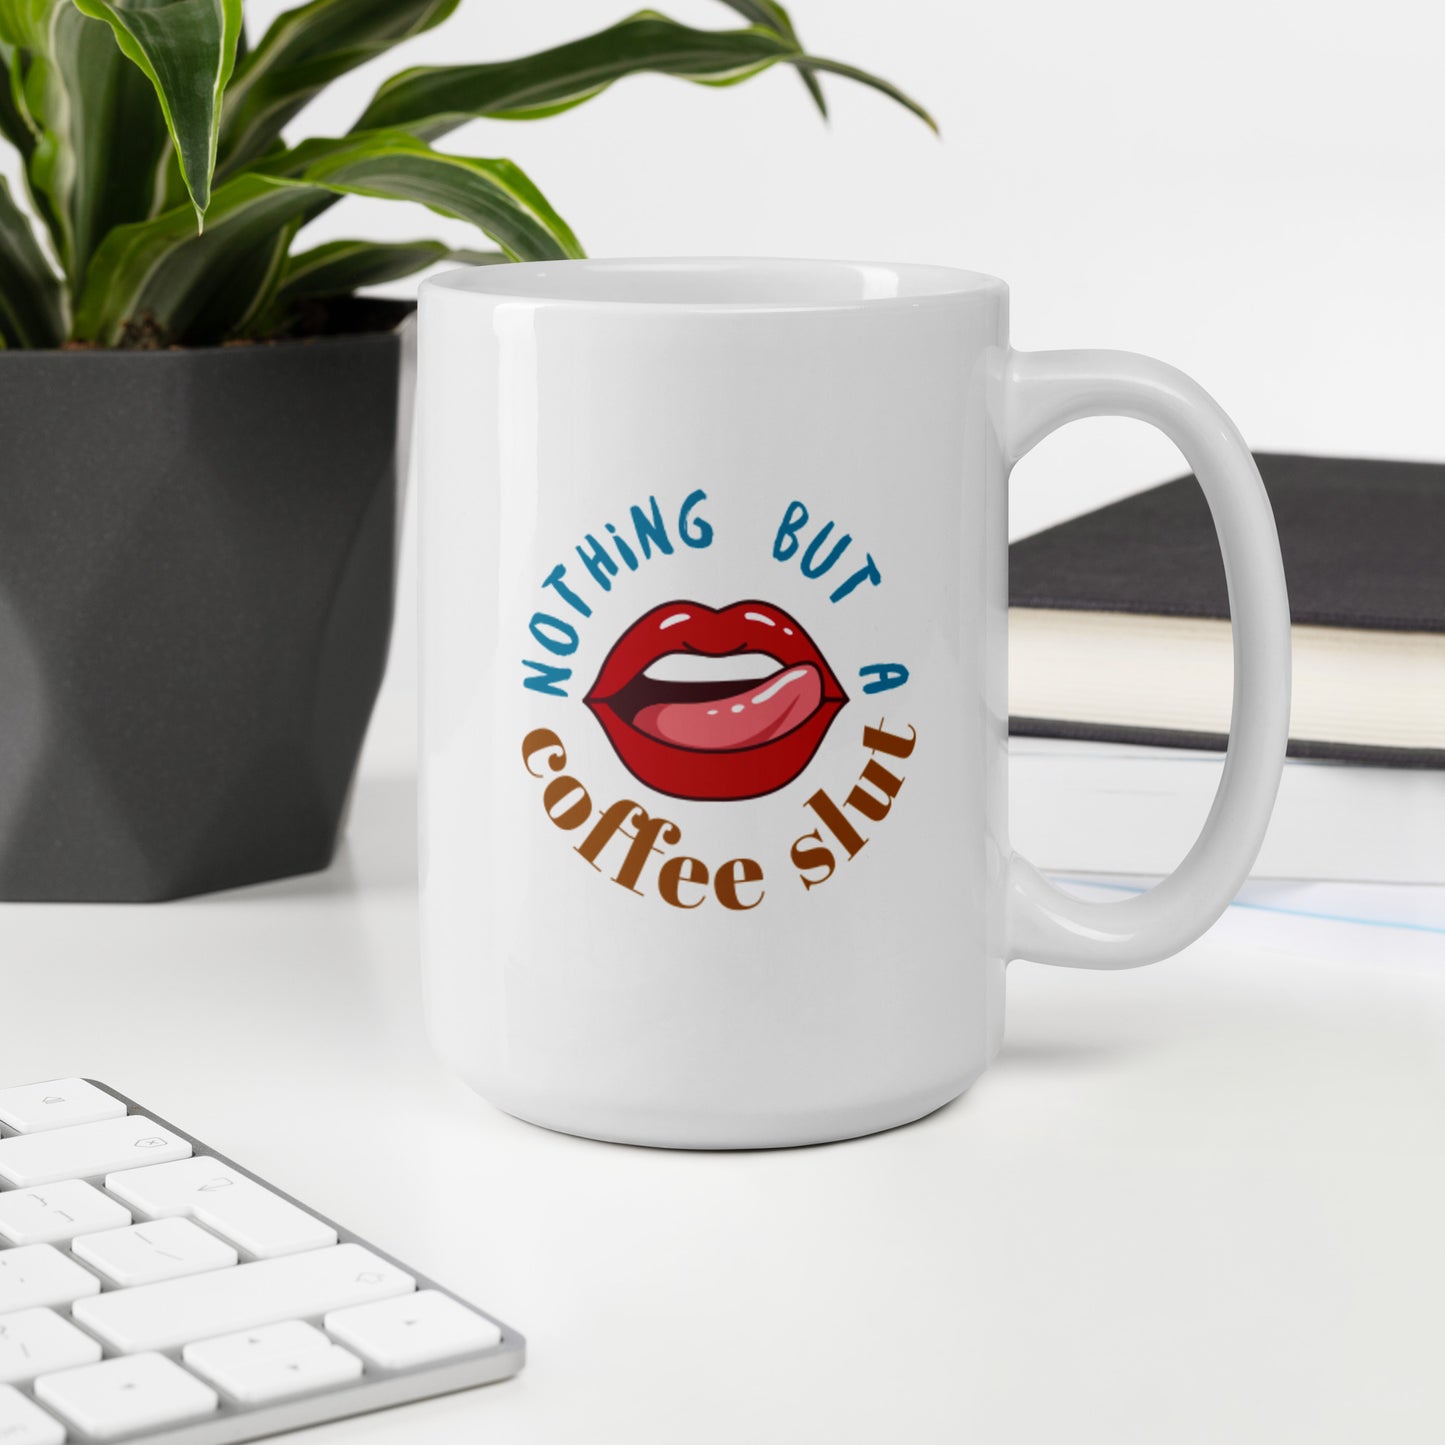 Coffee Slut - White Glossy Mug